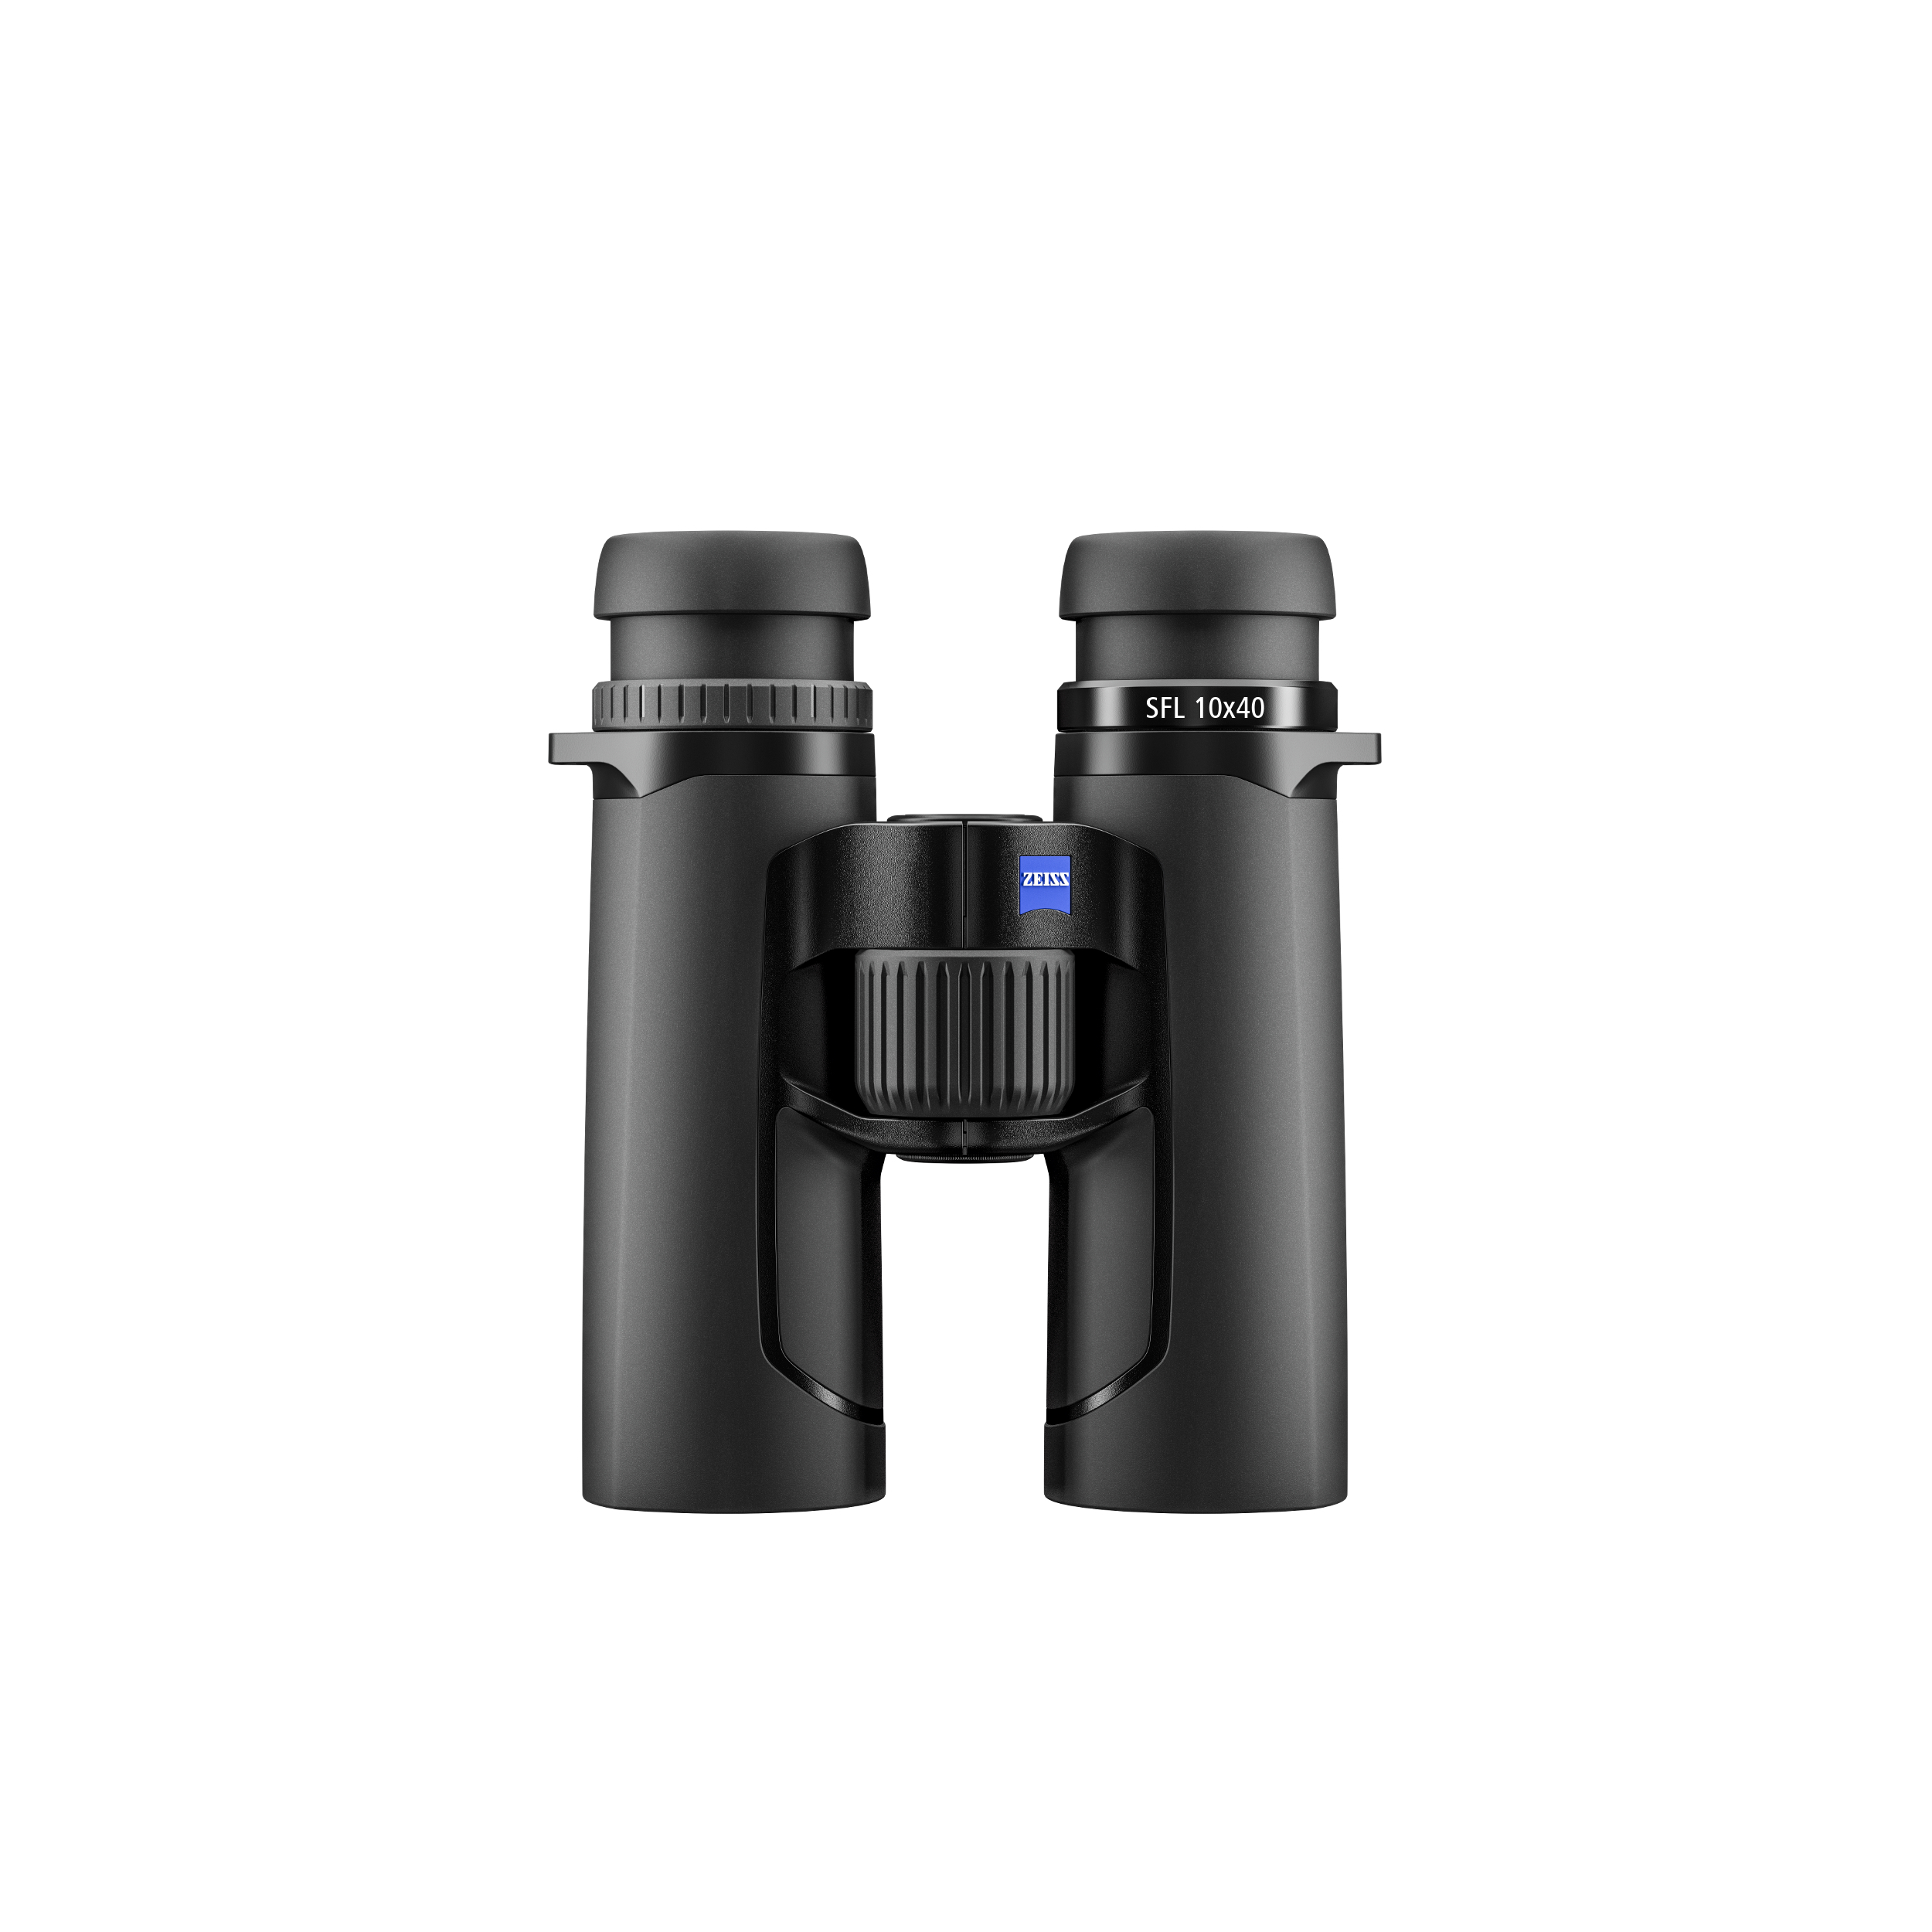 Zeiss Sfl Serie T * Ultra HD SFL Binoculars with Pouch - 10x40